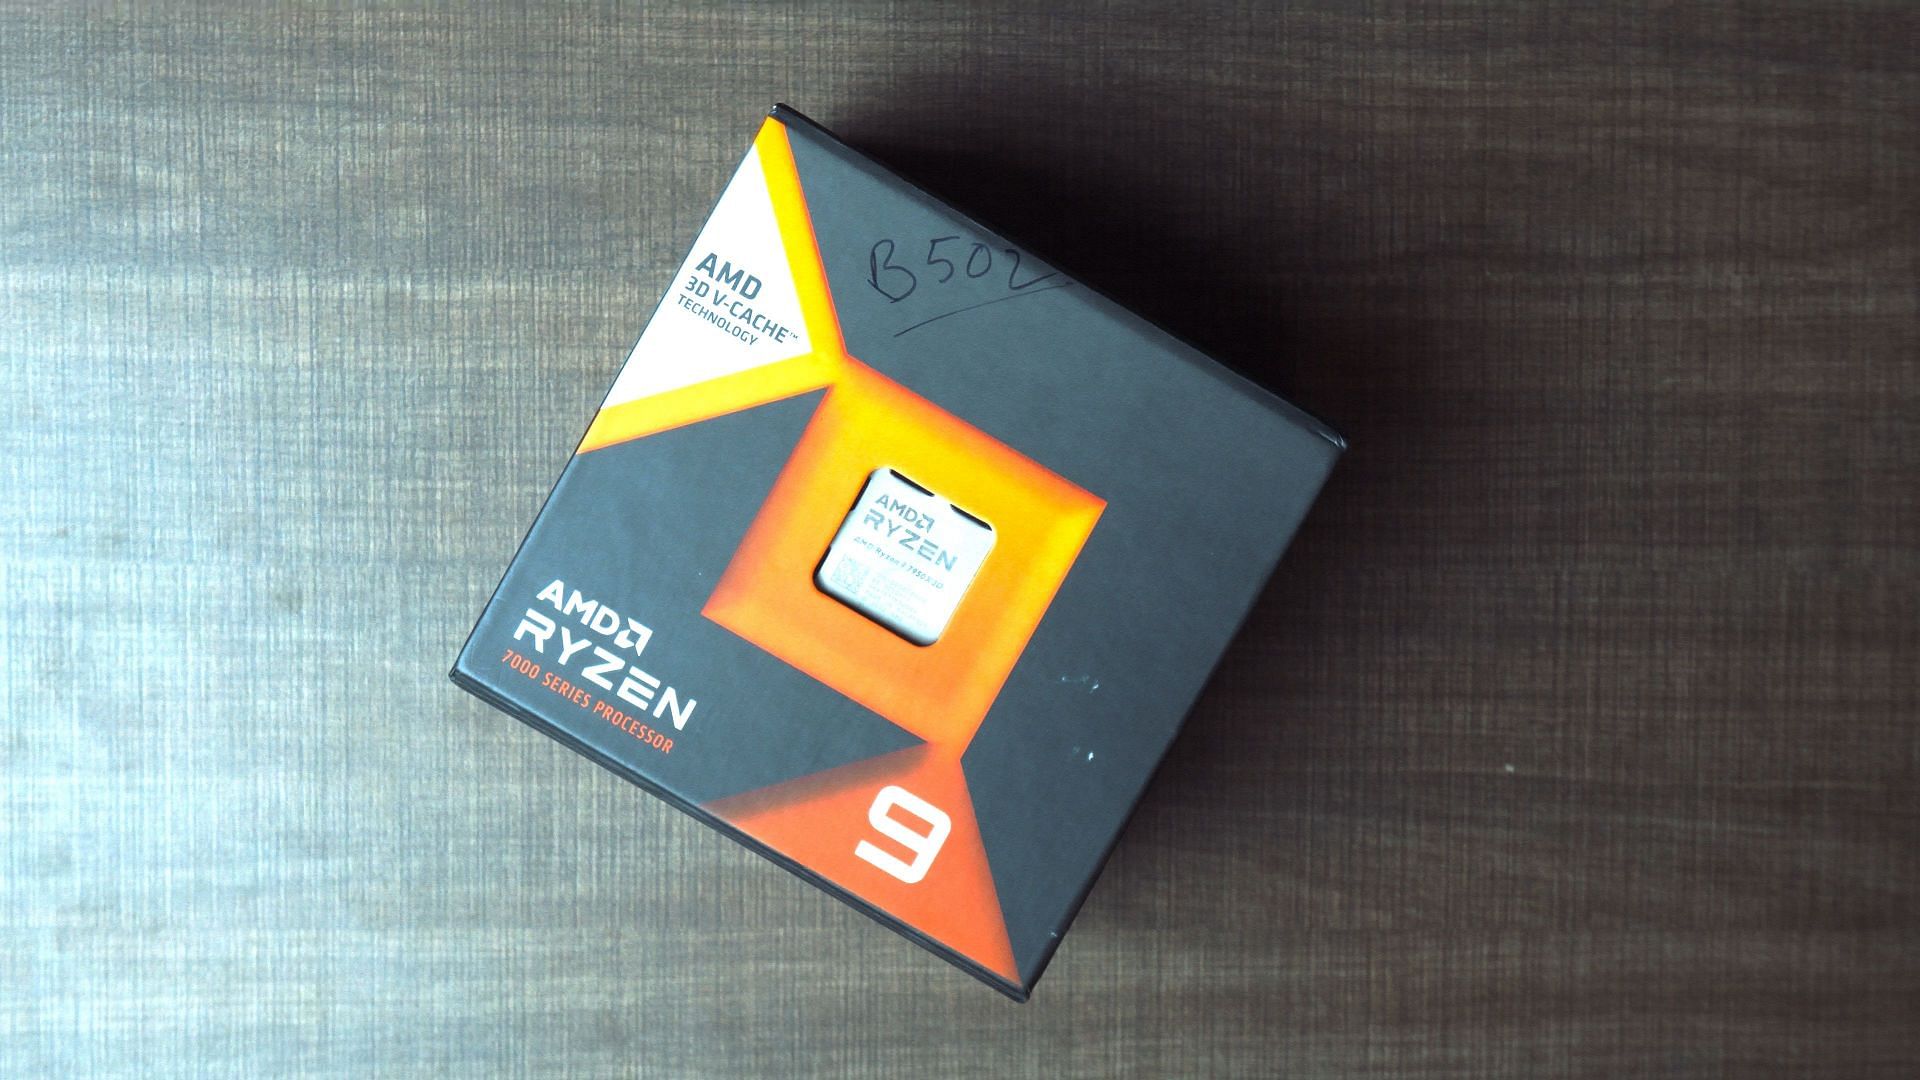 AMD Ryzen 9 7950X3D CPU review: Blazing fast but at a hefty cost